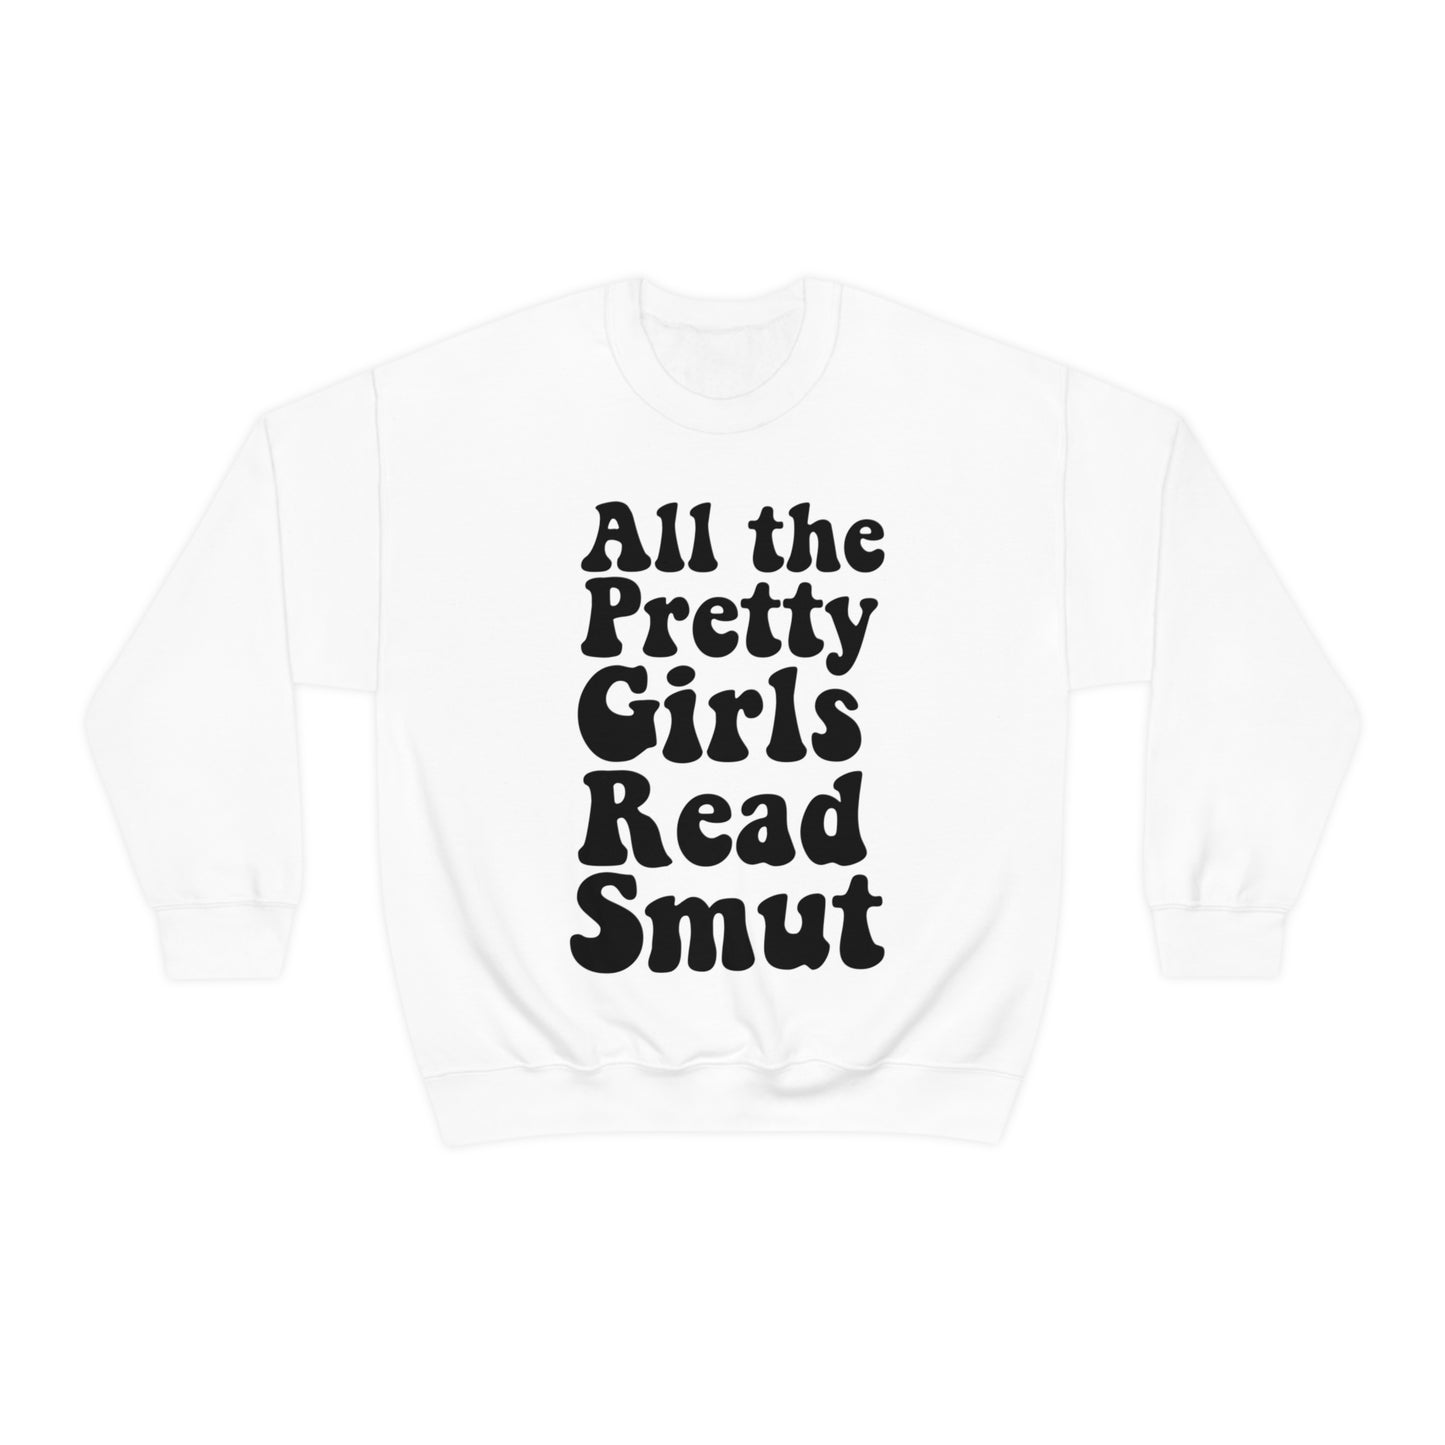 All the Pretty Girls Read Smut Crewneck Sweatshirt